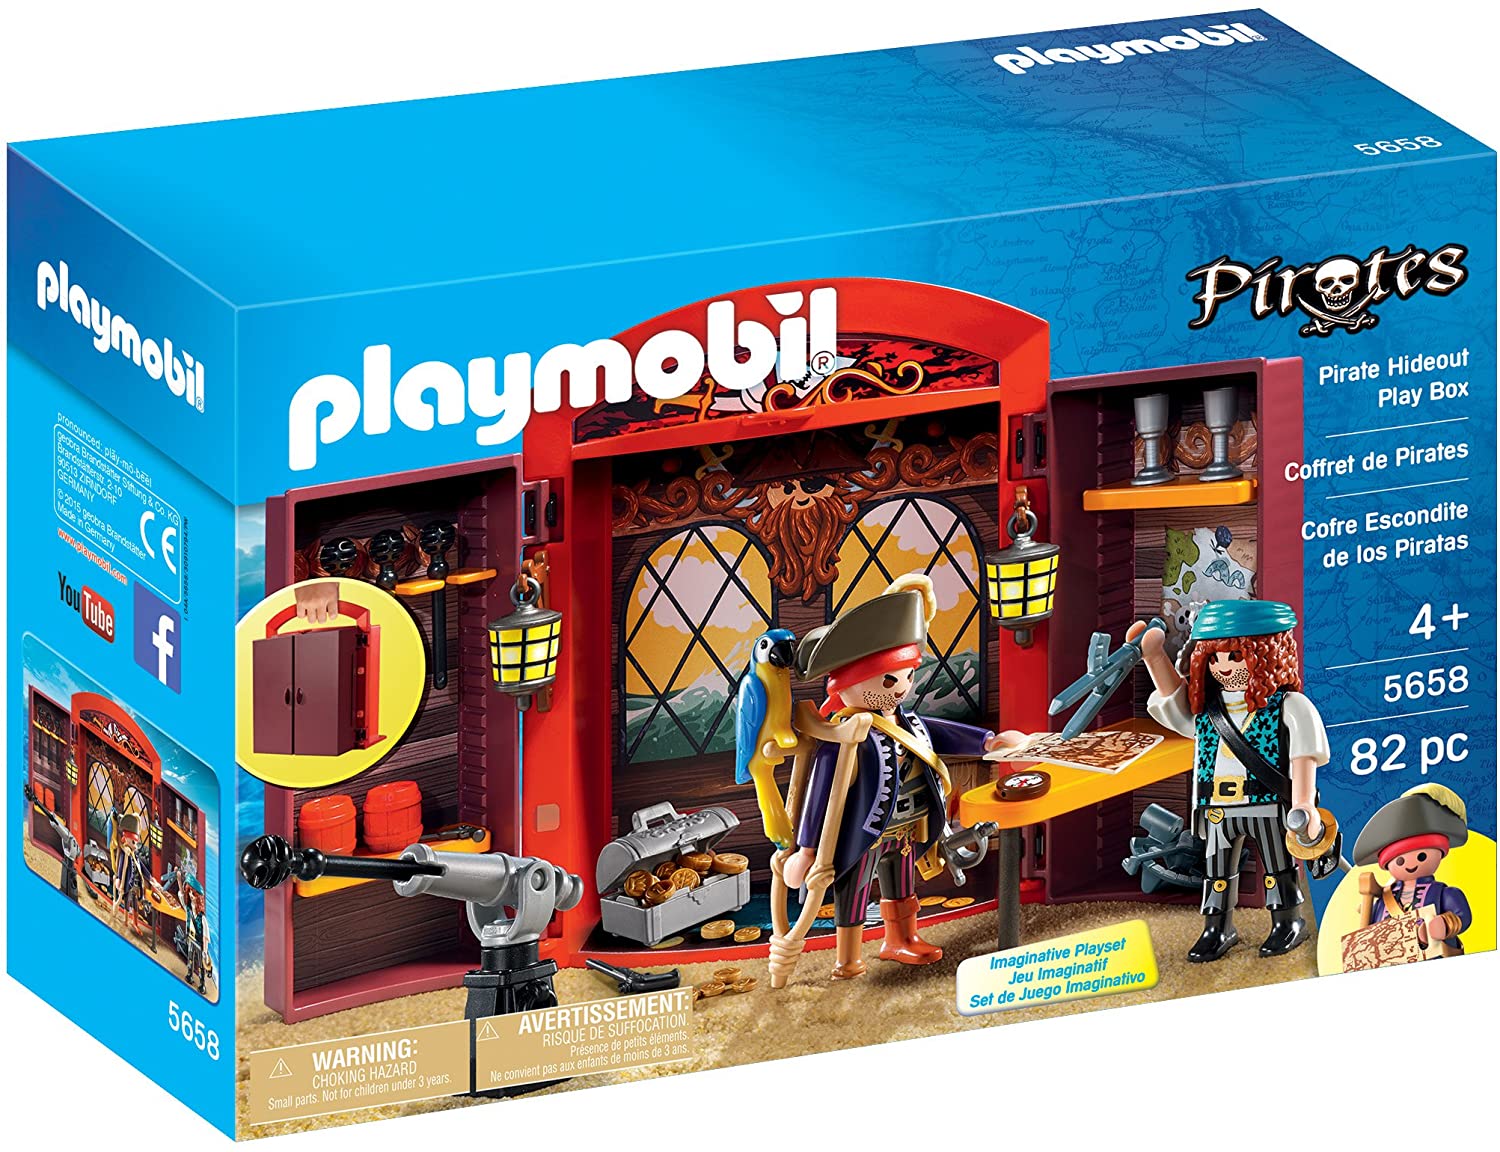 Playmobil Pirates Pirate Hideout Play Box Building Set 5658